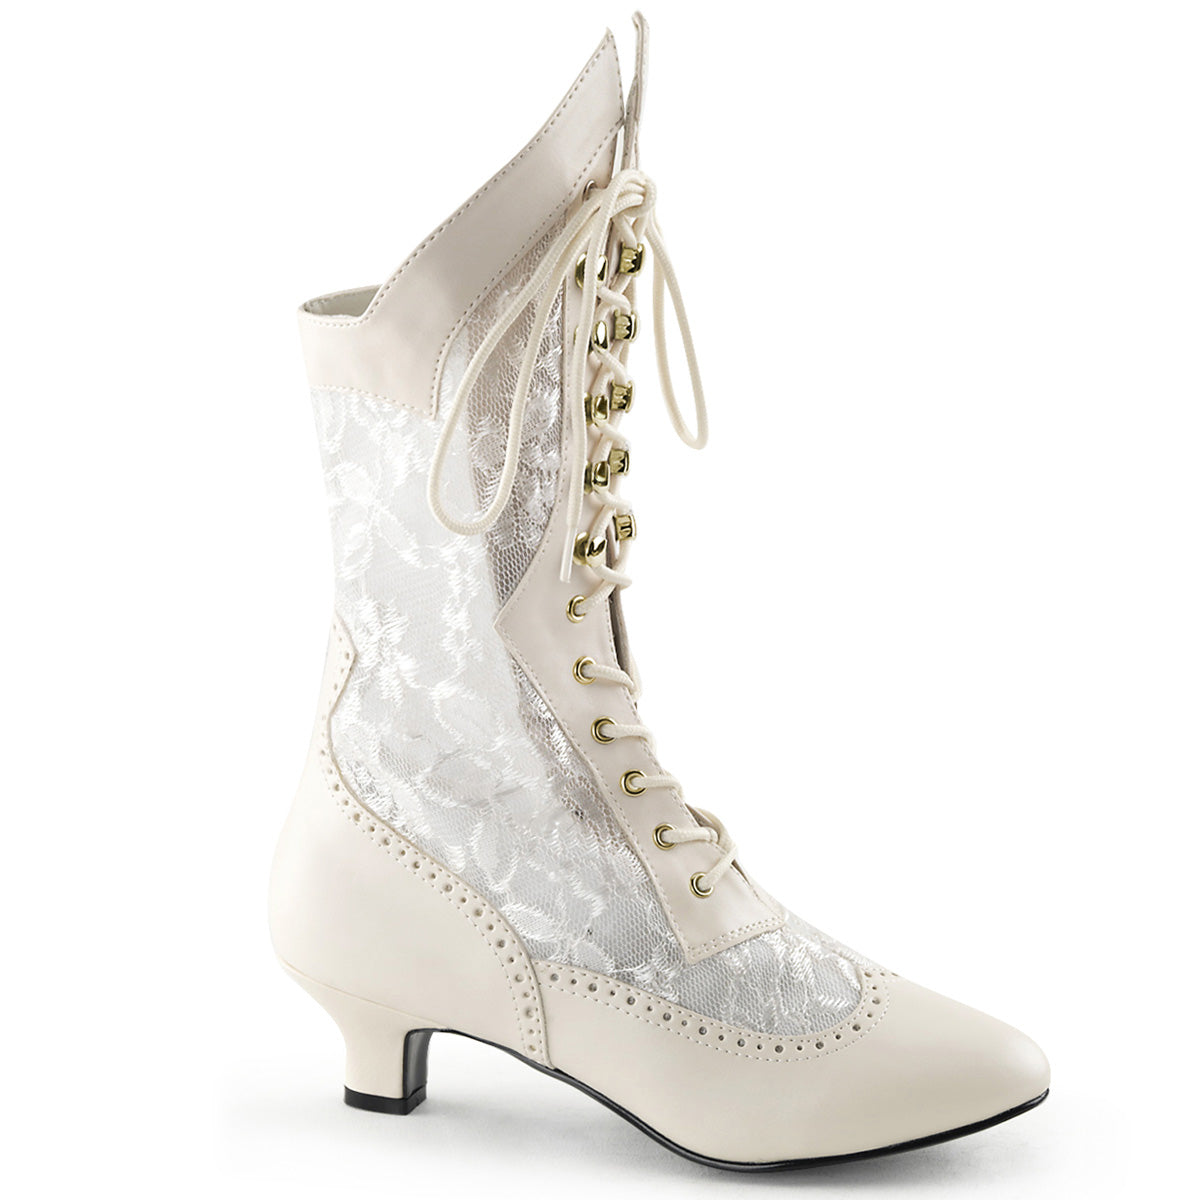 DAME-115 2 Inch Heel Ivory Pu Women's Boots Funtasma Costume Shoes